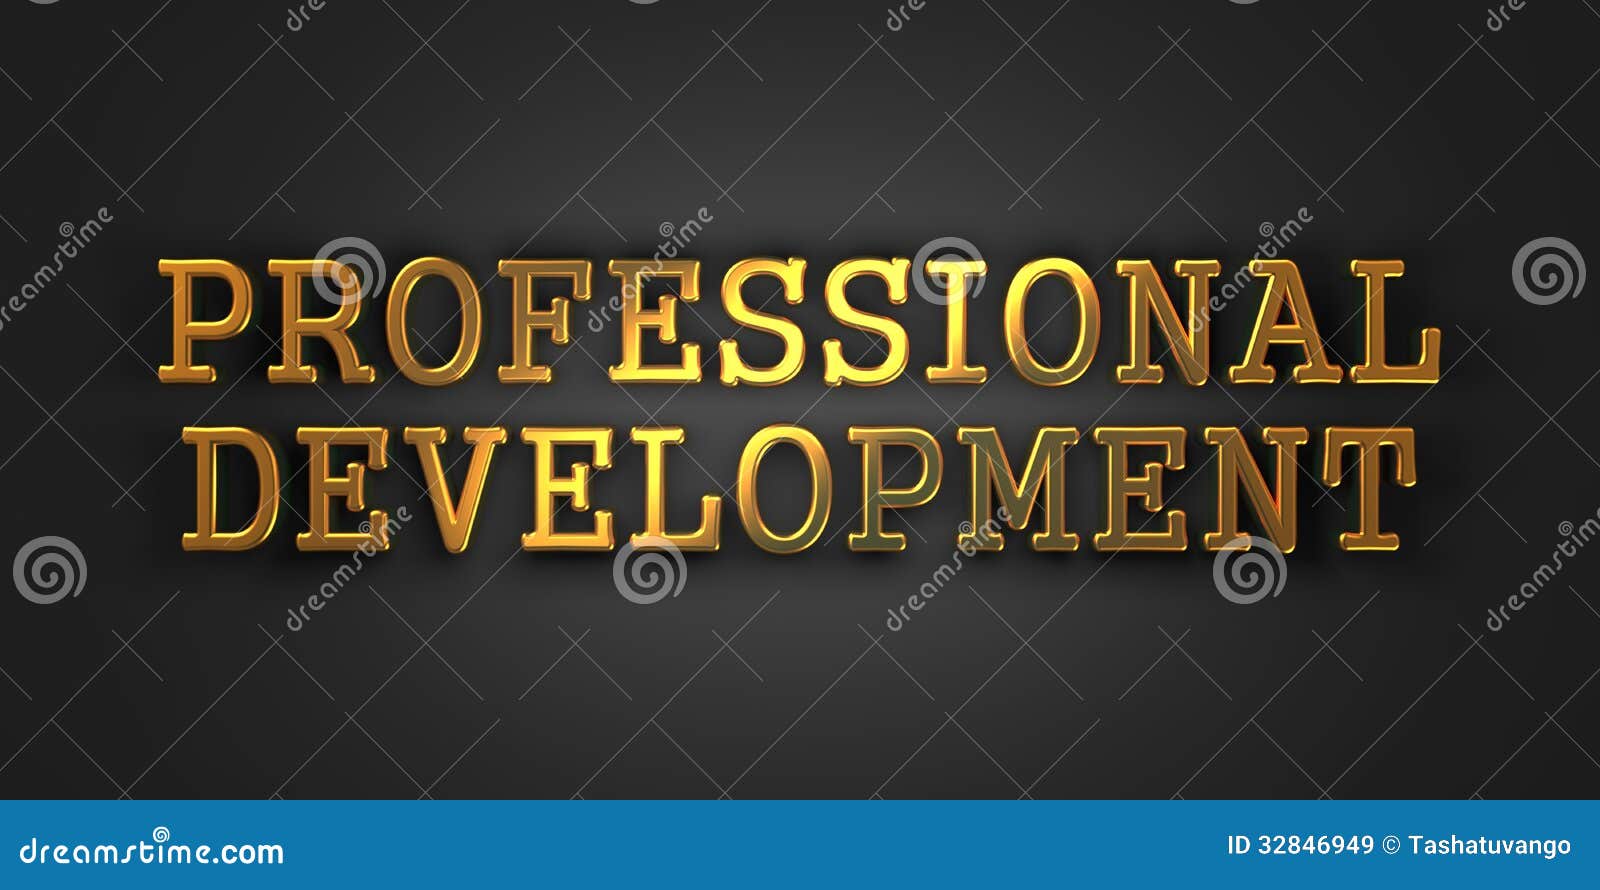 professional development. business concept.